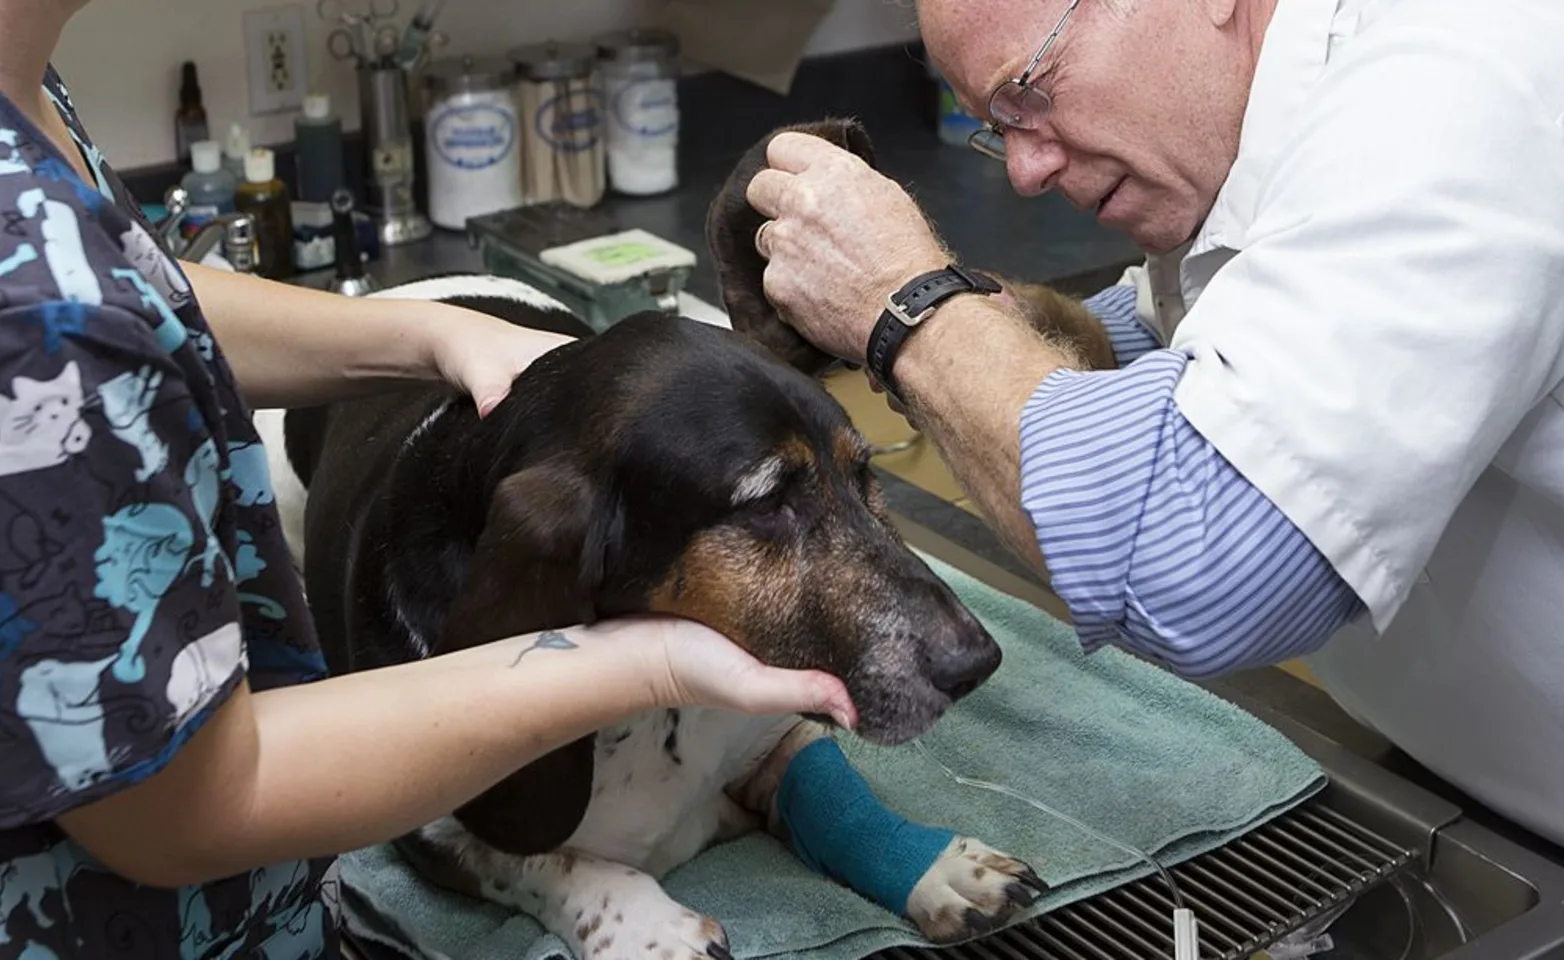 Dog receiving emergency care treatment at Goldorado Animal Hospital